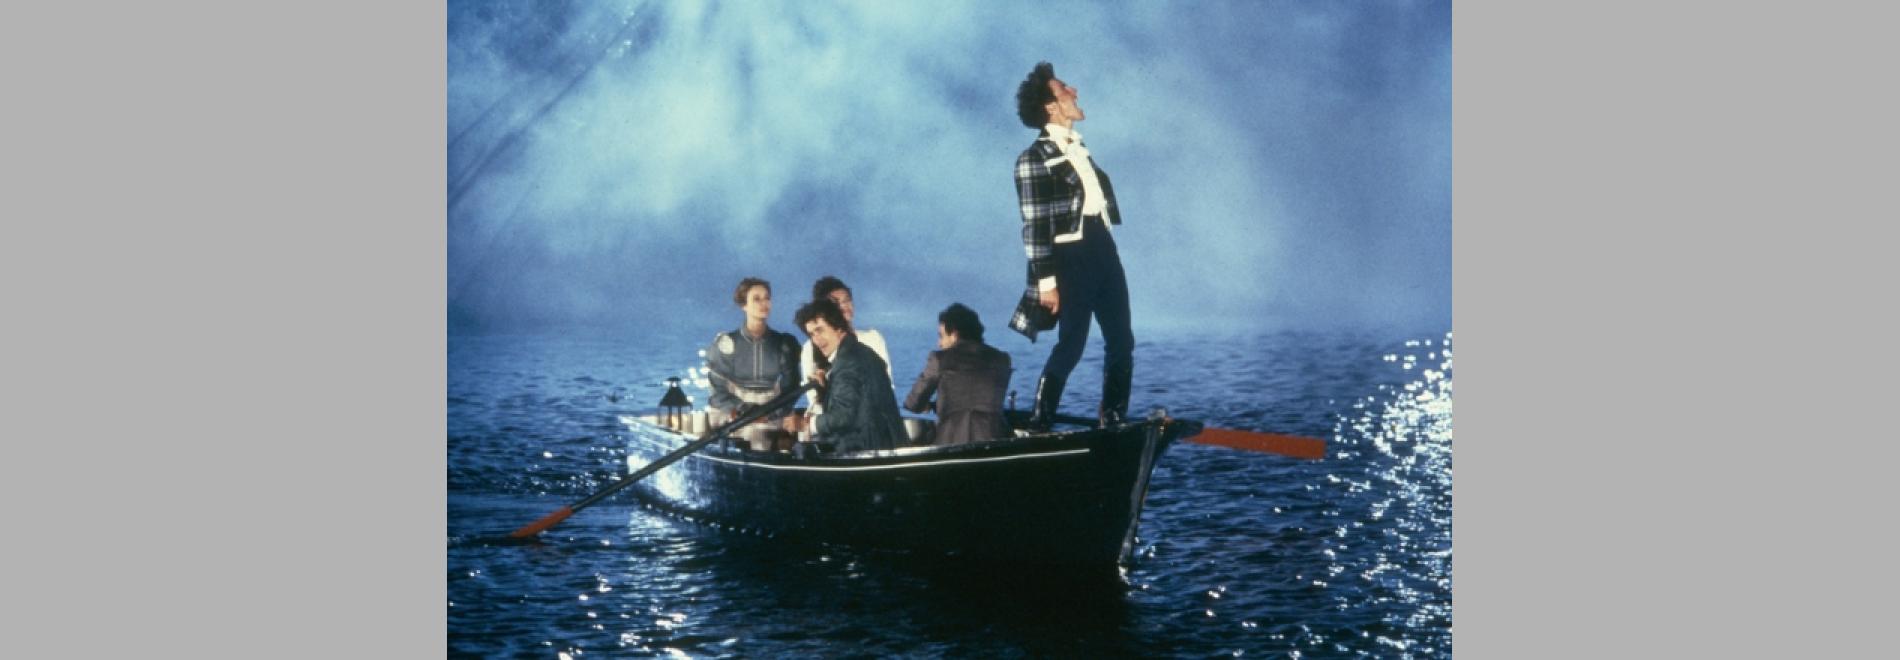 Rowing with the Wind (Gonzalo Suárez, 1988)